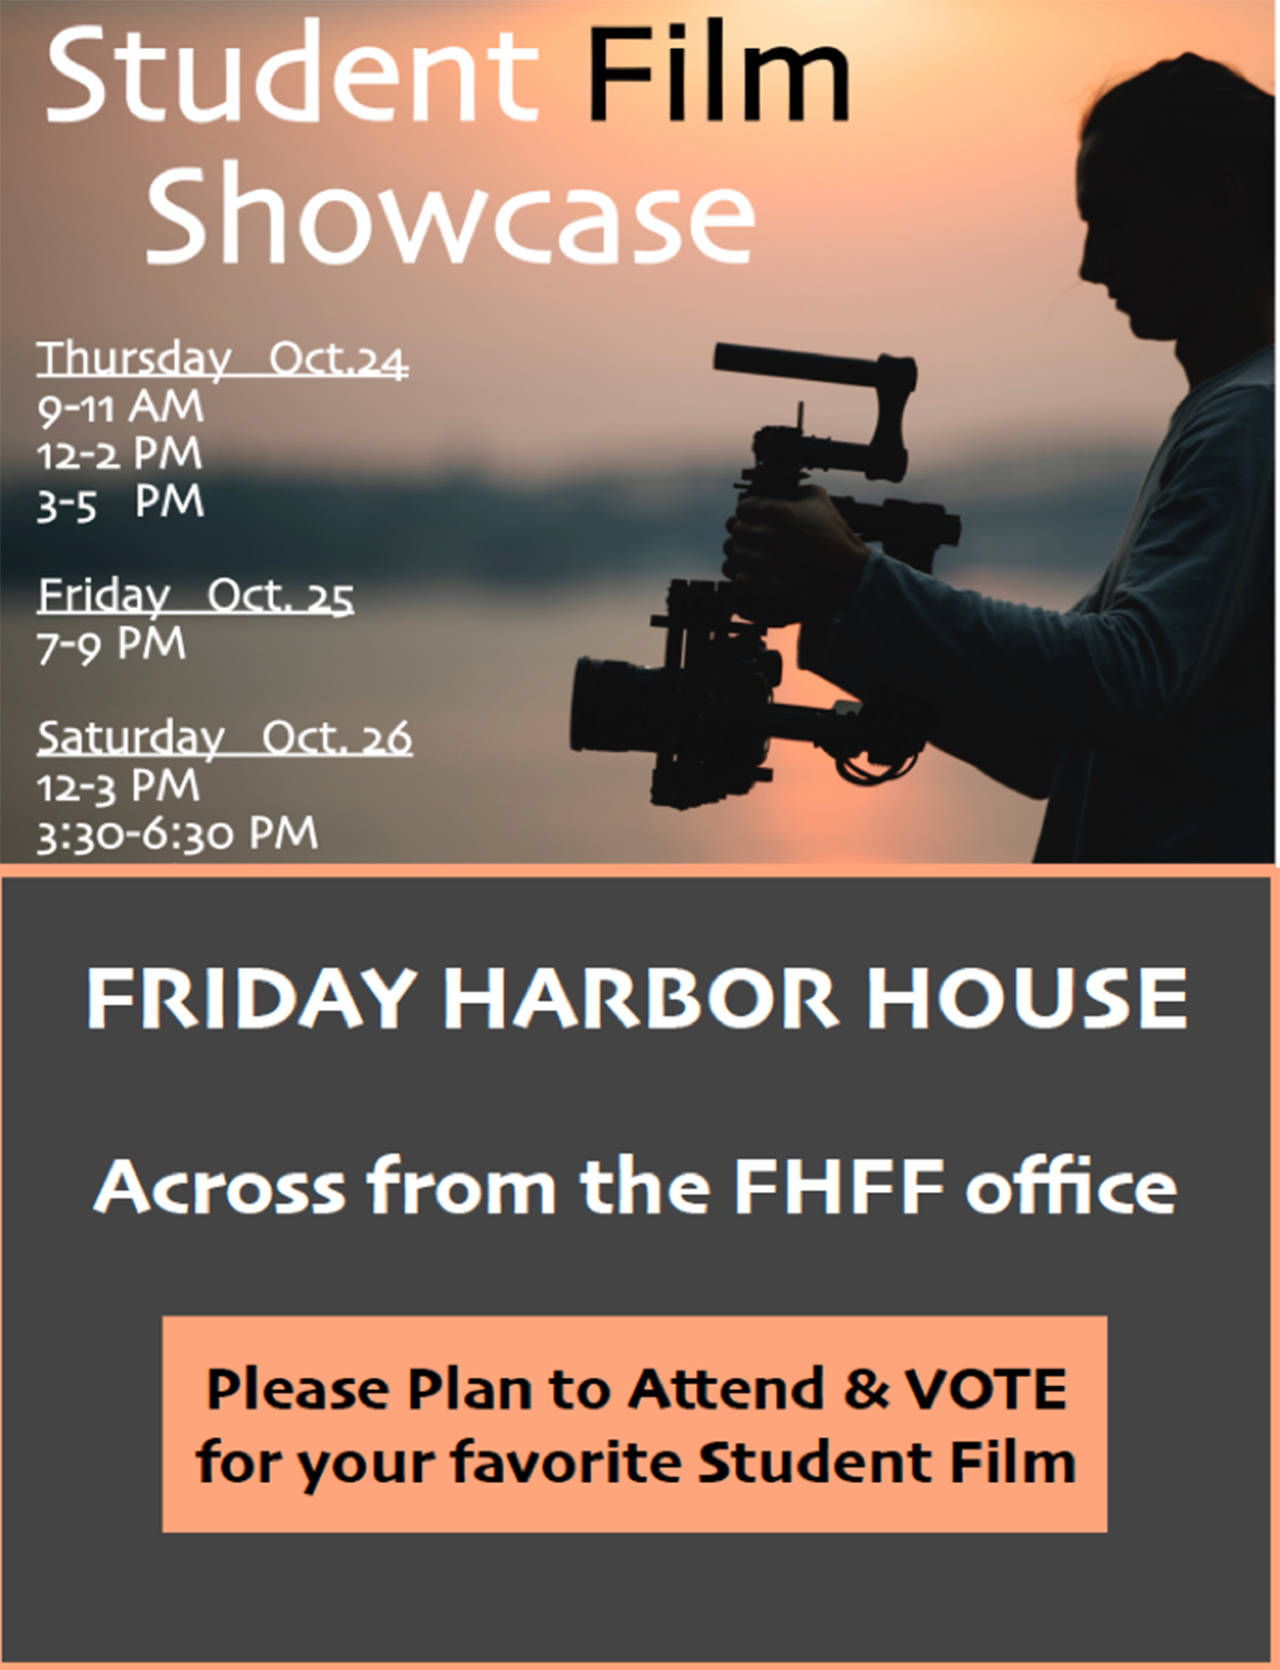 Student film showcase added to Friday Harbor Film Festival